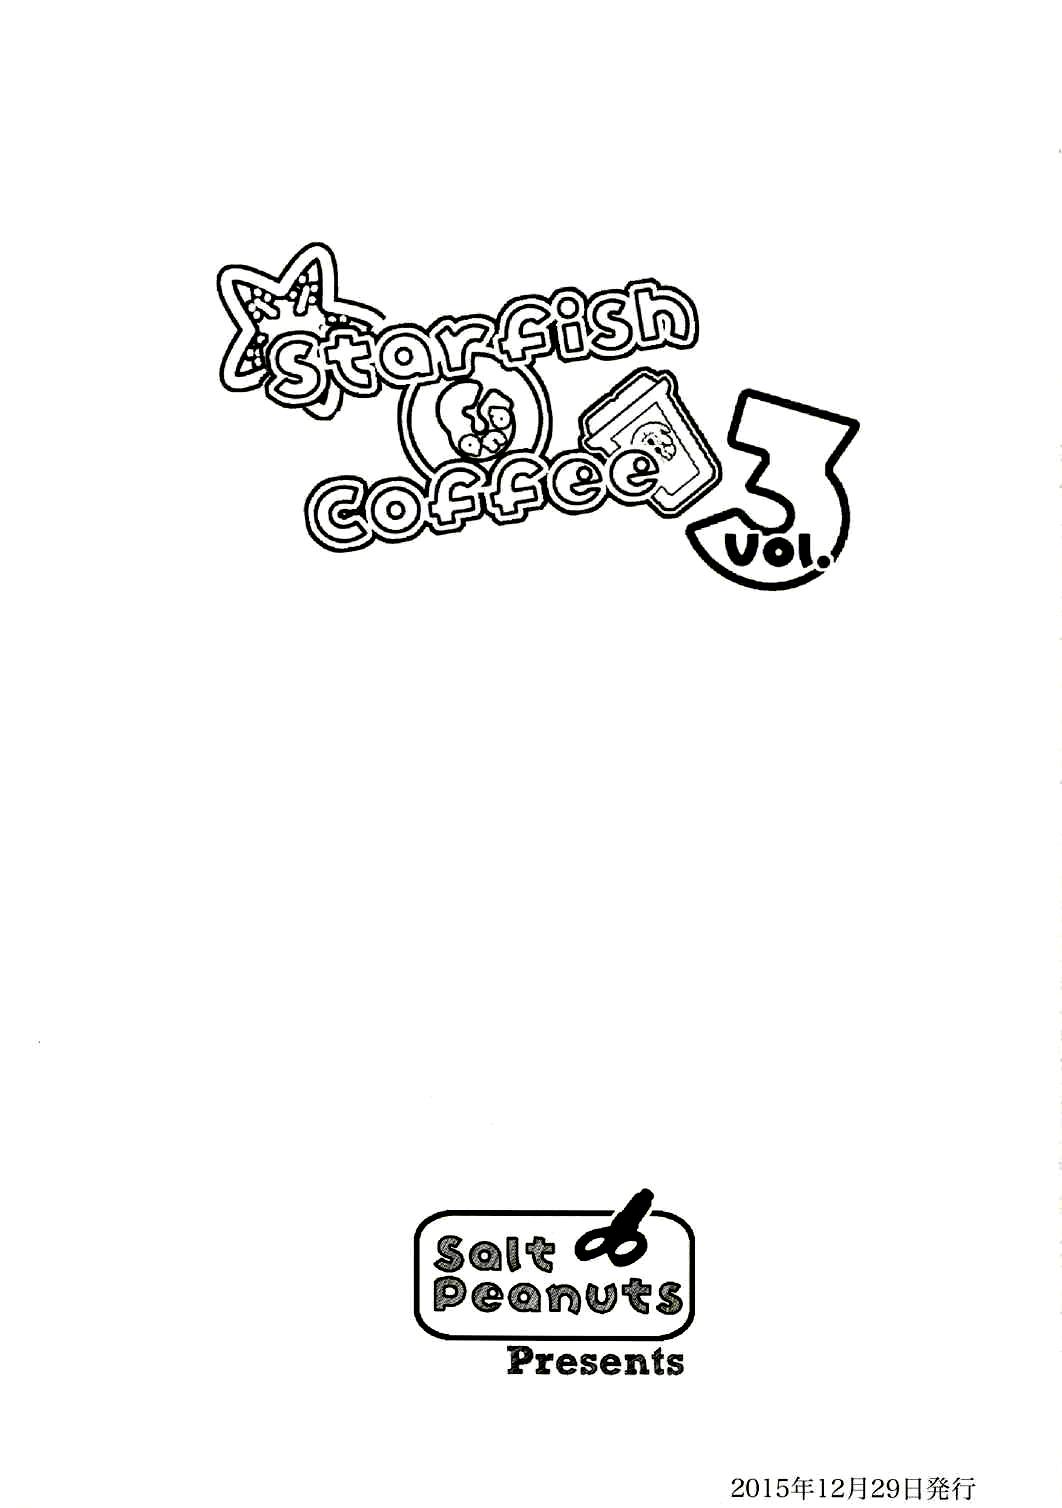 European Starfish and Coffee Vol. 3 - Nichijou Negro - Page 4